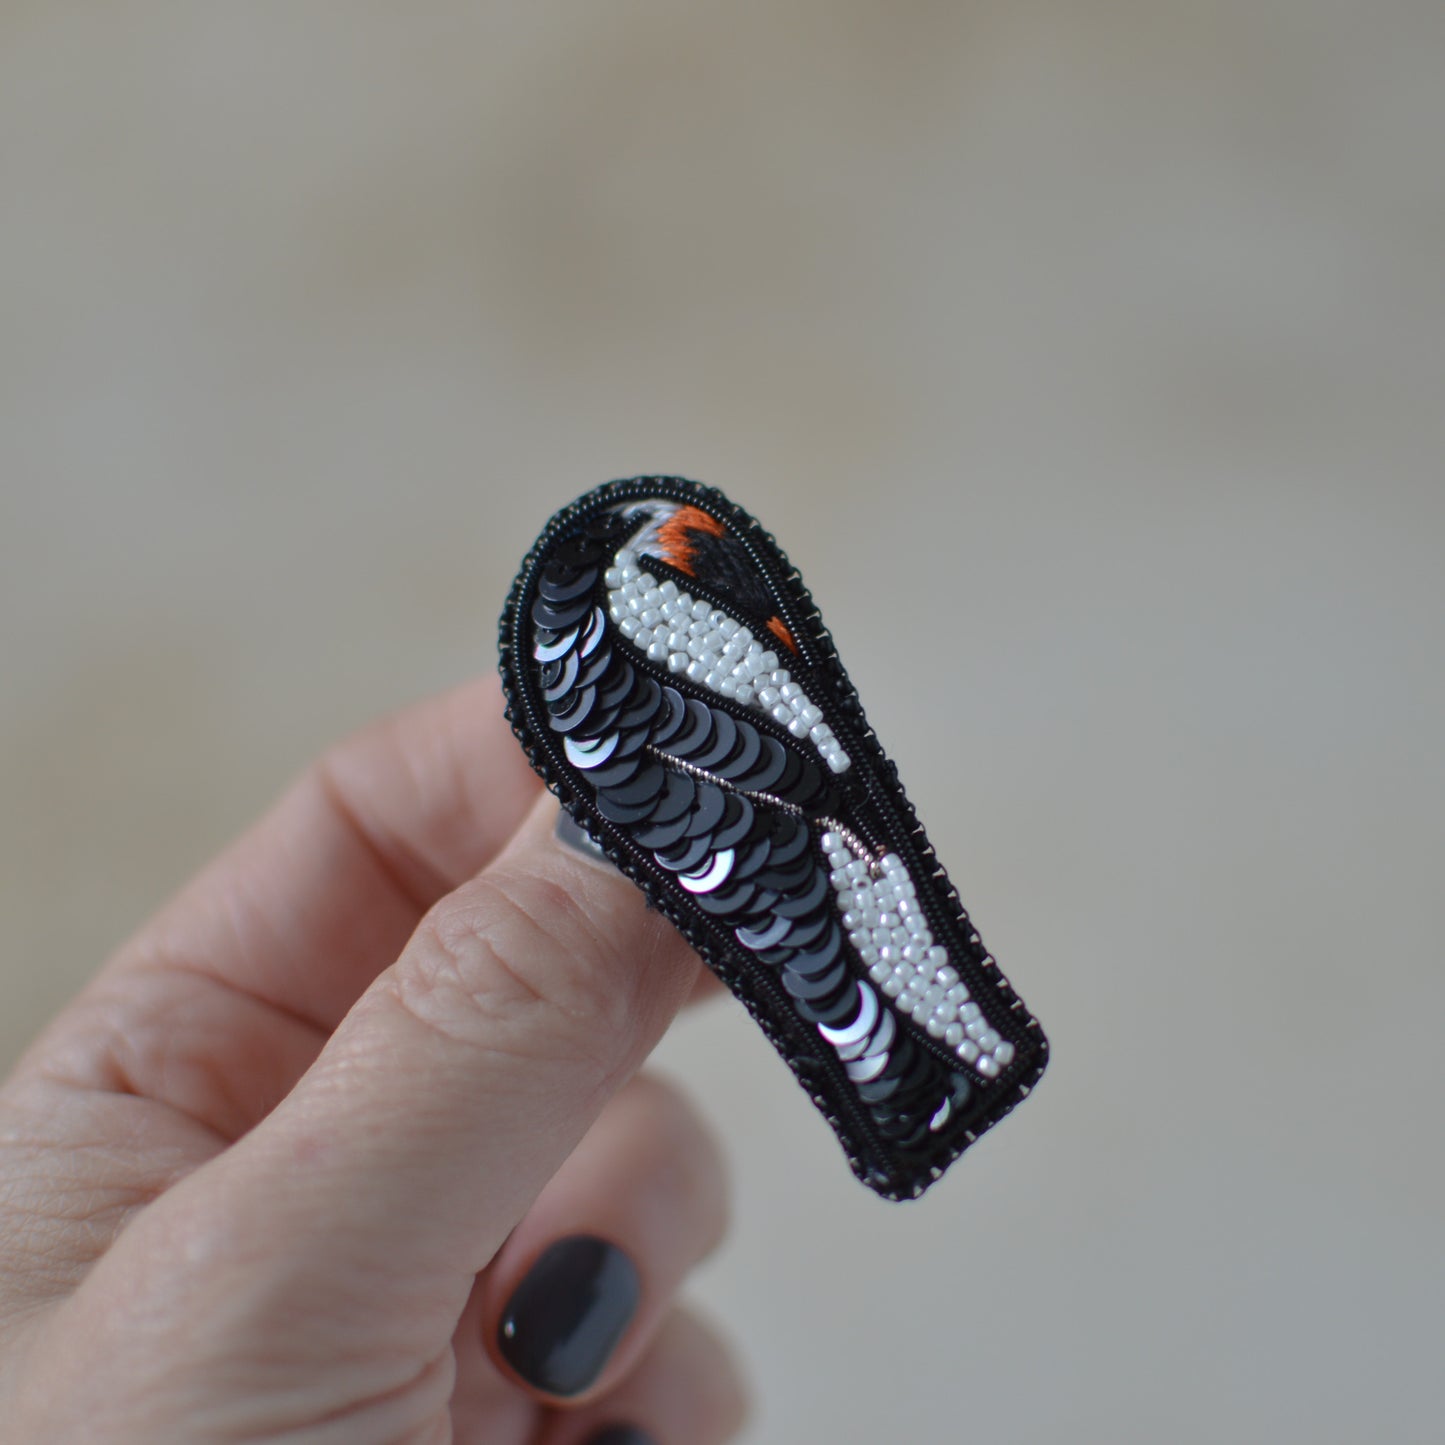 Emperor Penguin Embroidered Brooch